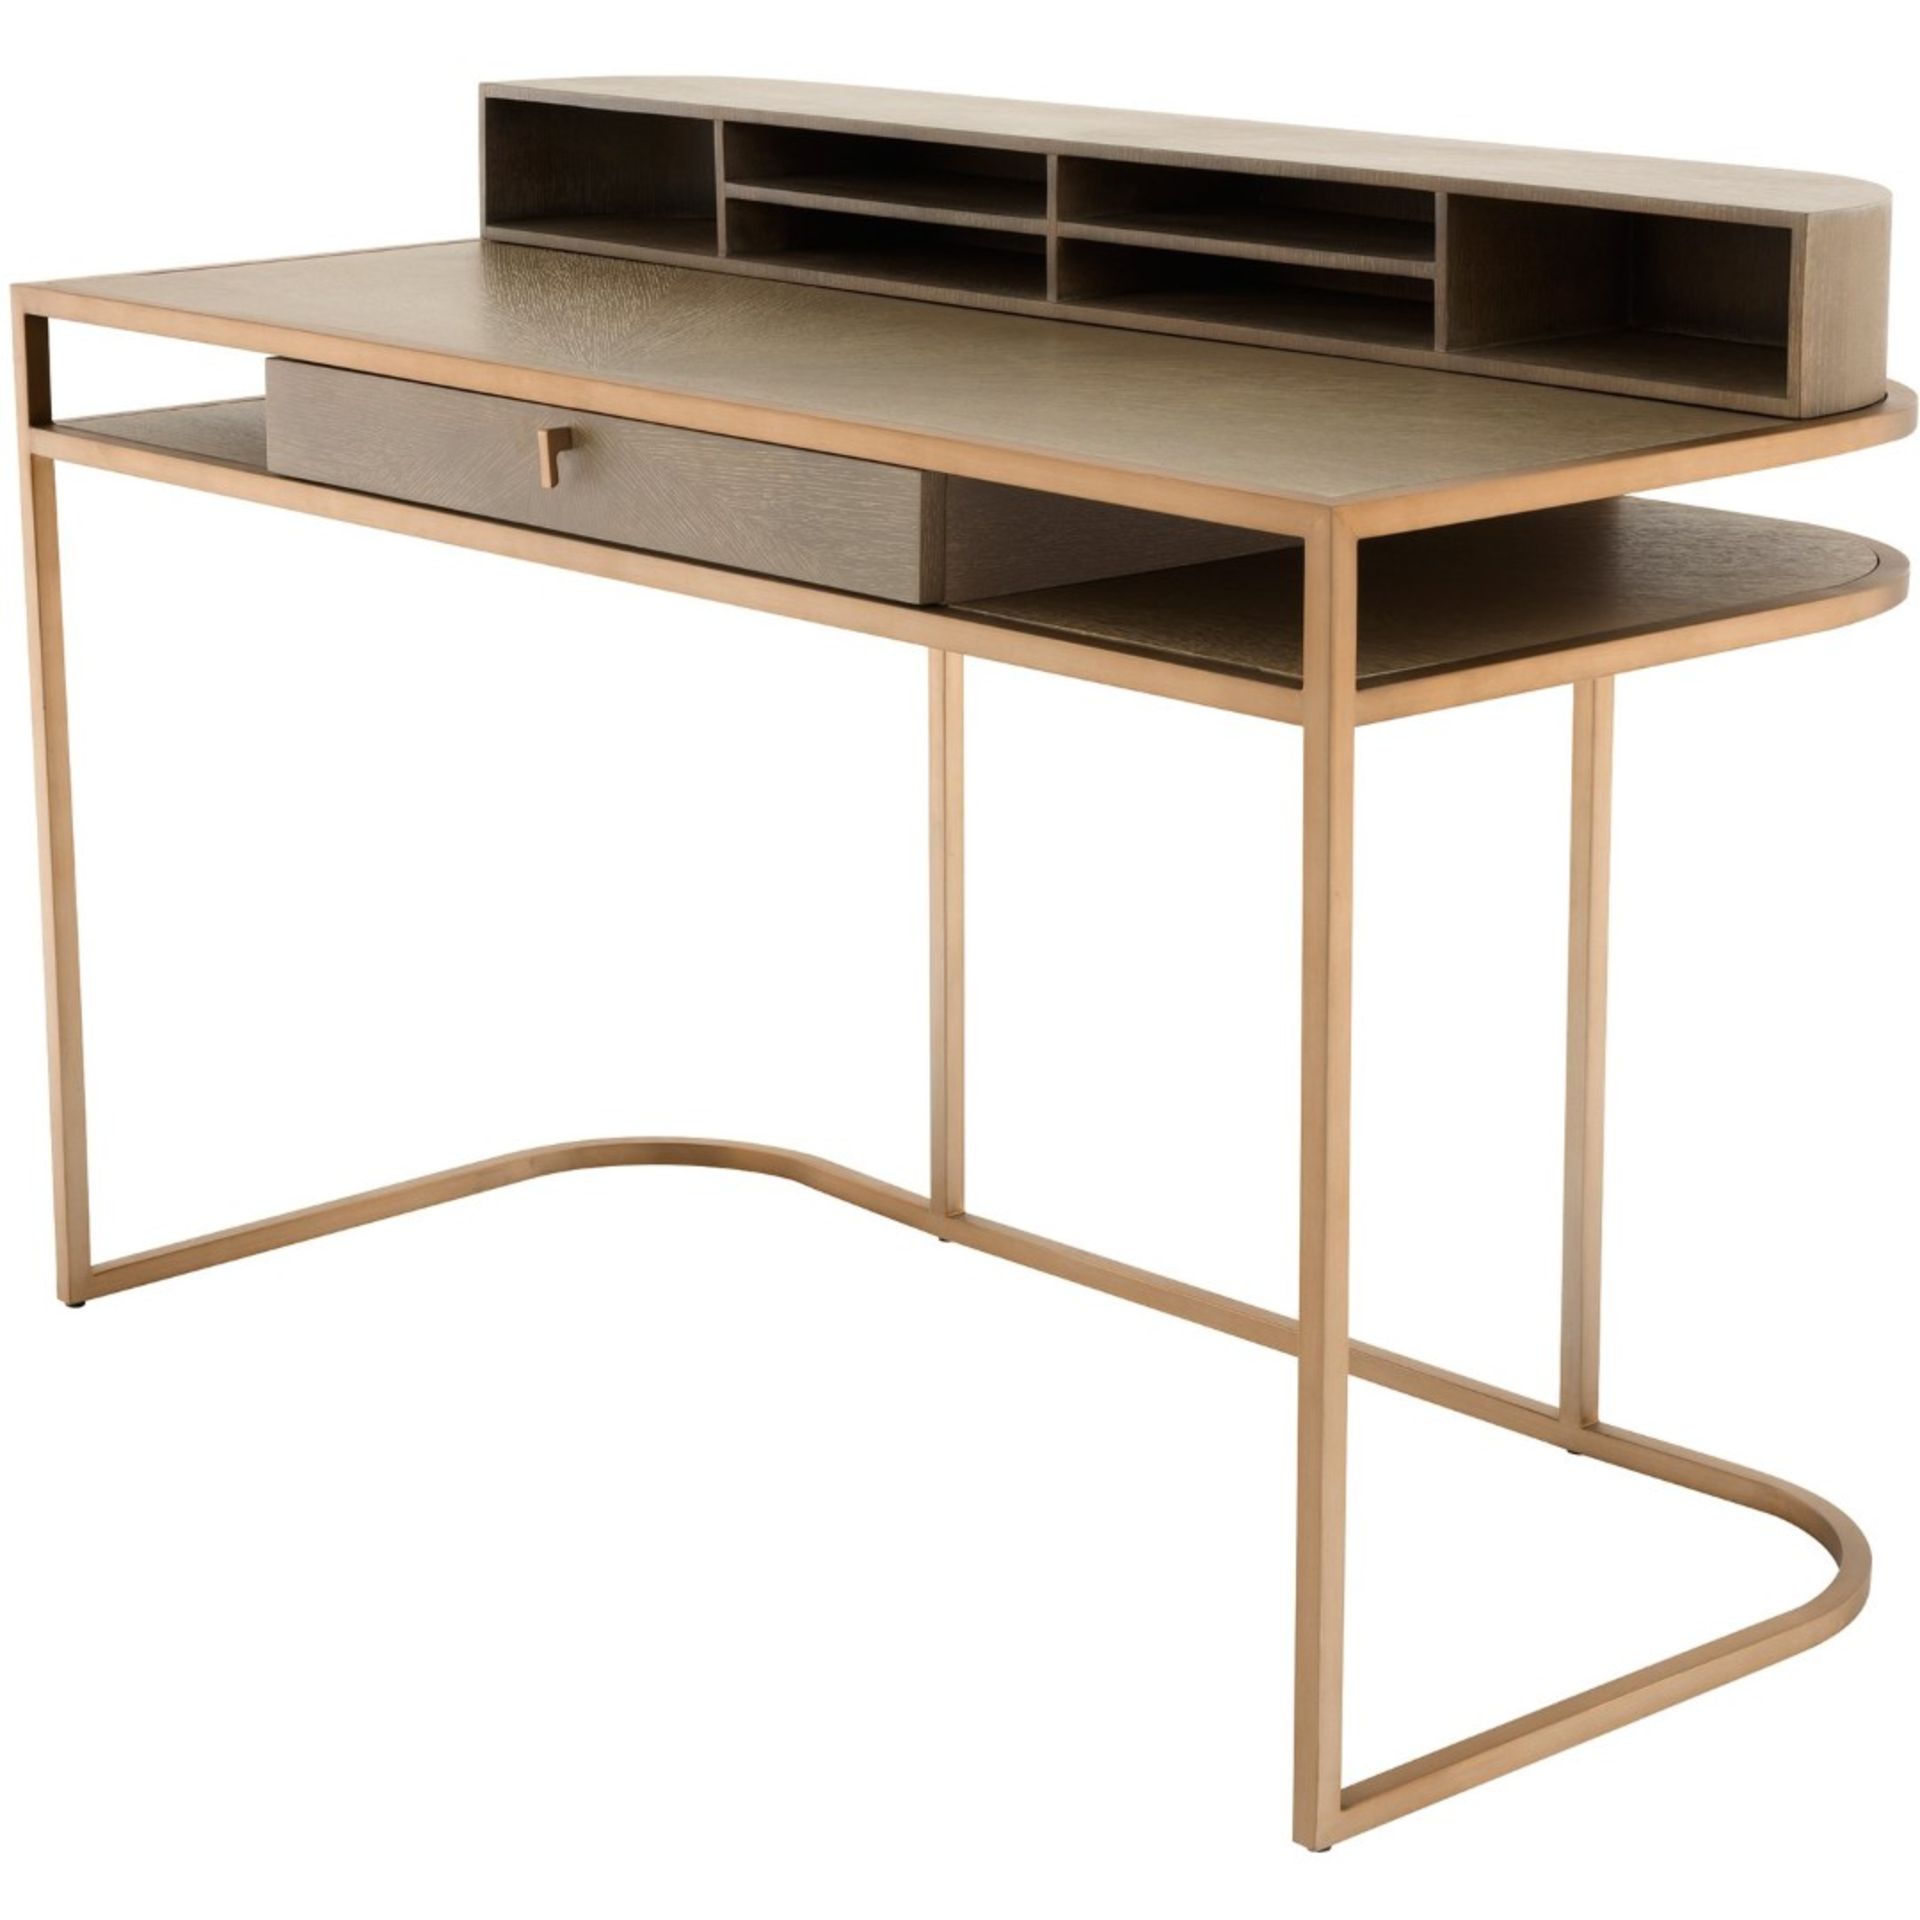 1 x EICHHOLTZ 'Highland' Designer Desk With Washed Oak And Brushed Brass Finishes - Ex-Display - - Image 2 of 12